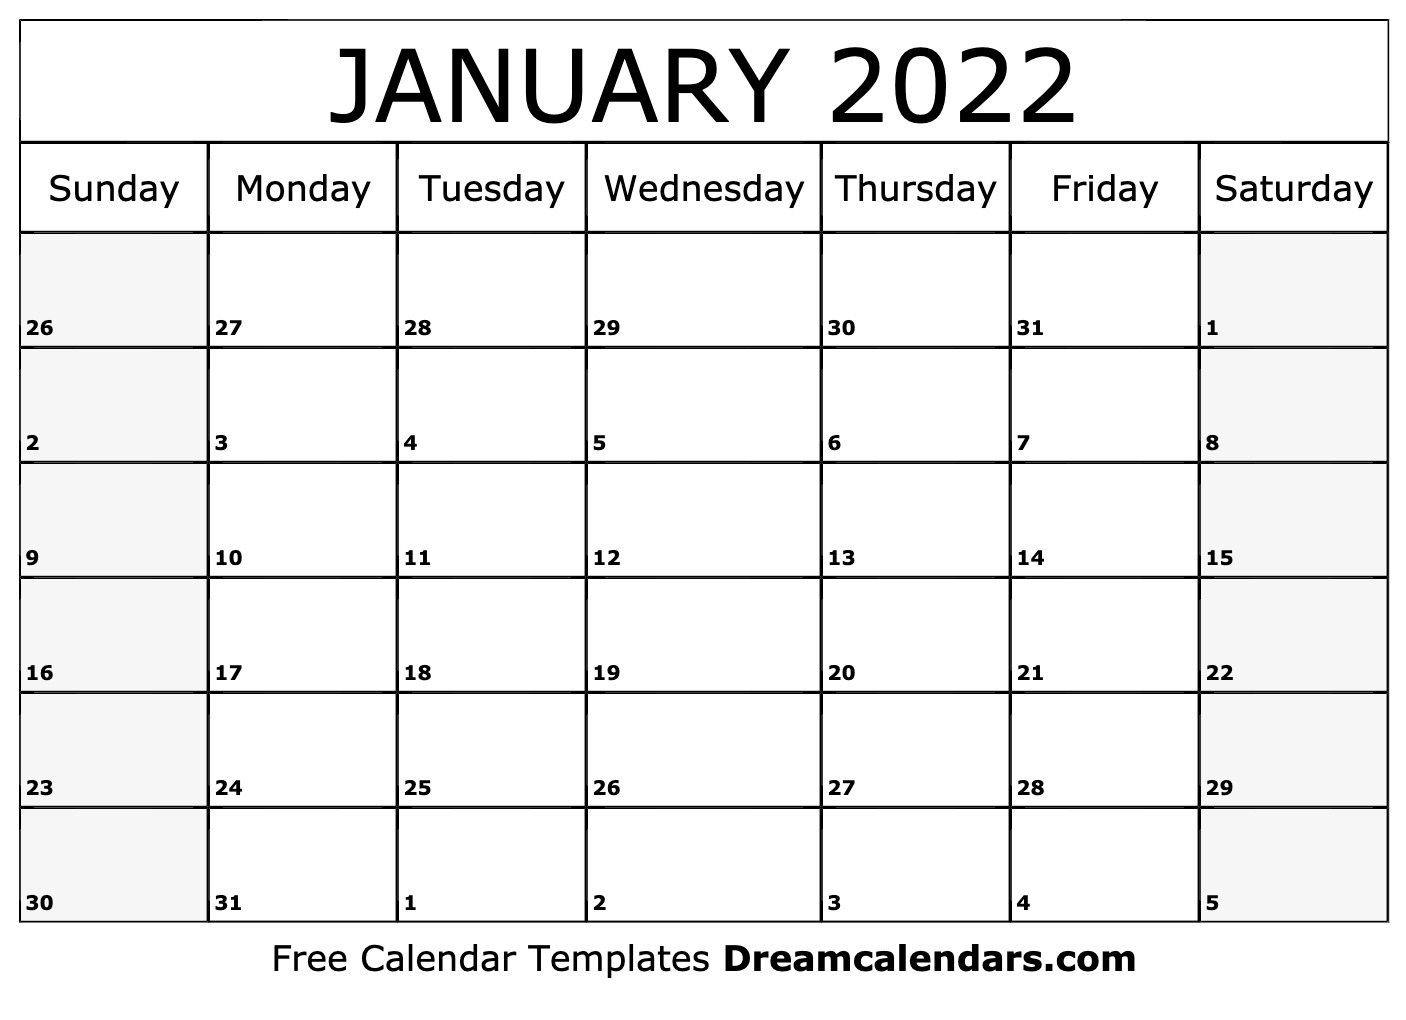 Get January 2022 National Calendar